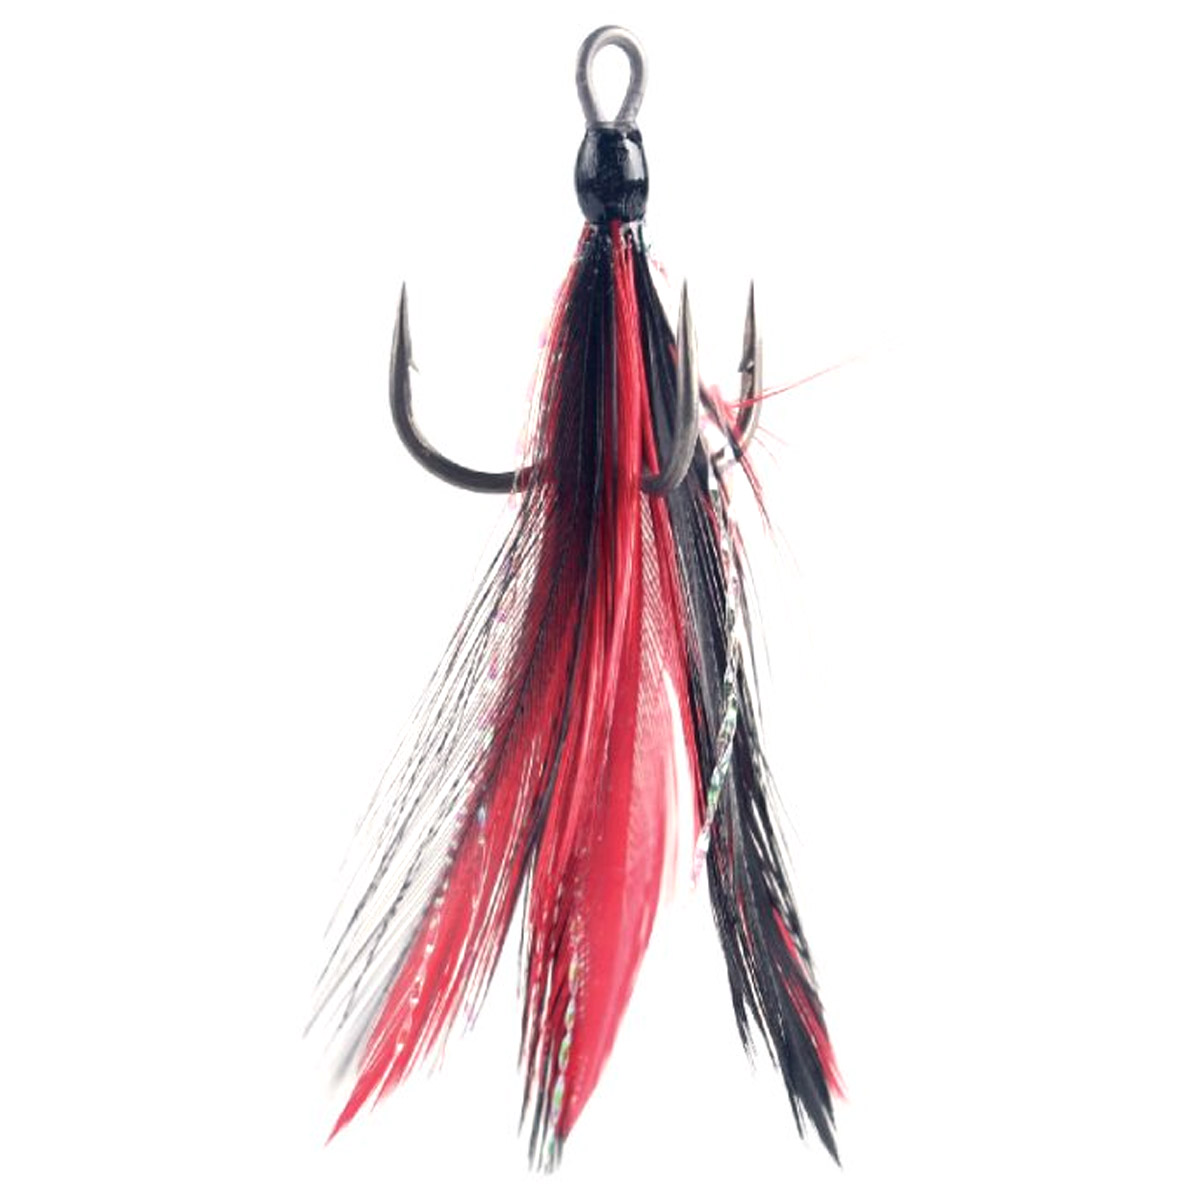 BKK Feathered Spear 21-SS Treble Hook Black & Red